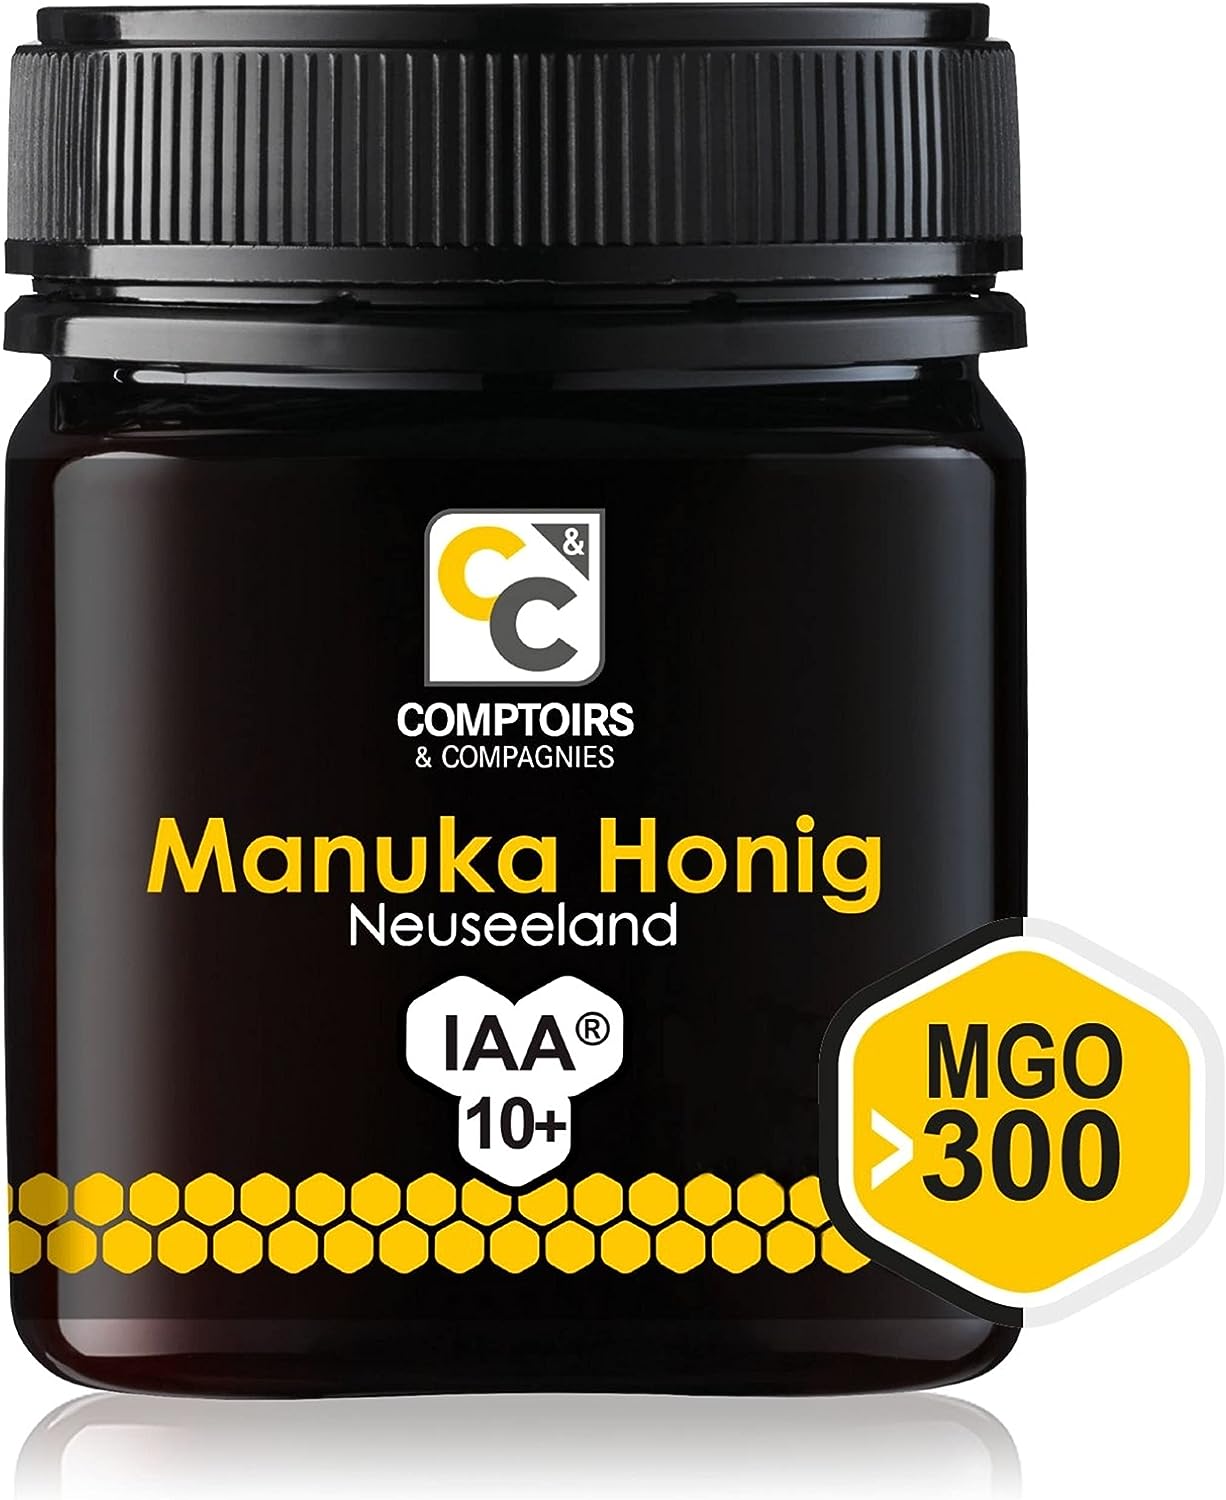 Comptoirs & Compagnies Manuka honing IAA®10+ 250g (MGO 263)